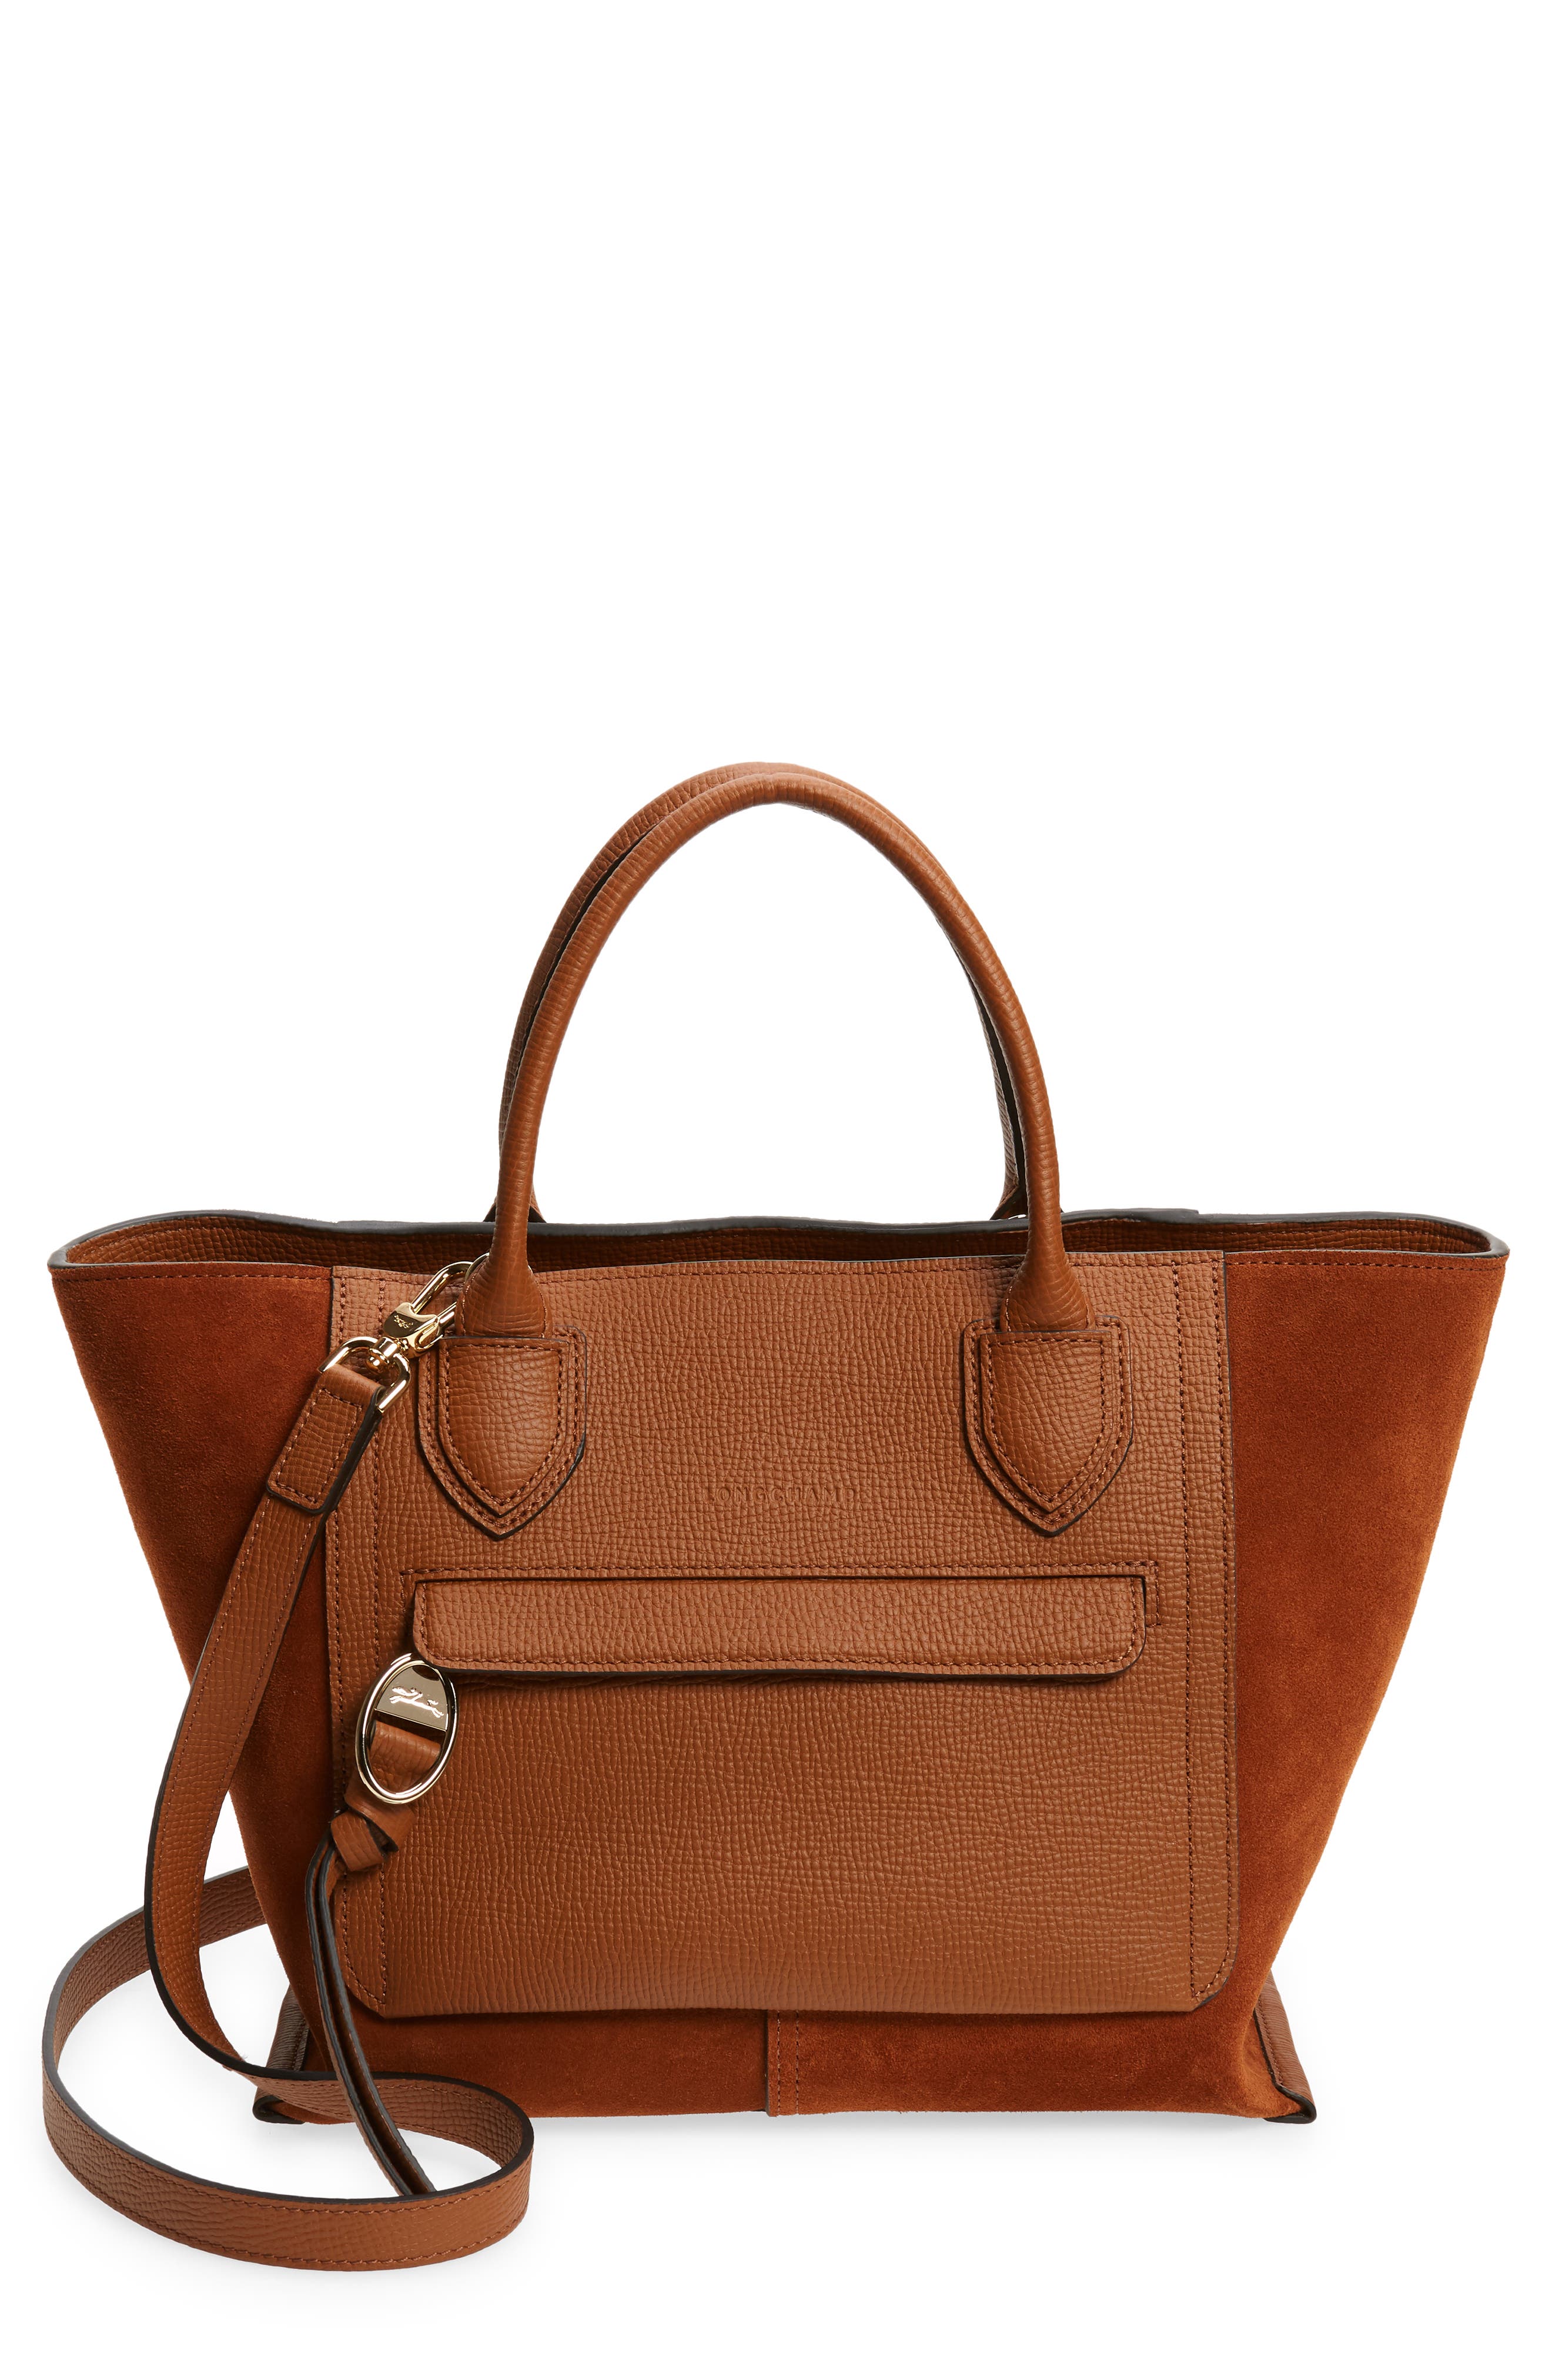 Longchamp Medium Mailbox Suede & Leather Top Handle Bag in Cognac at Nordstrom